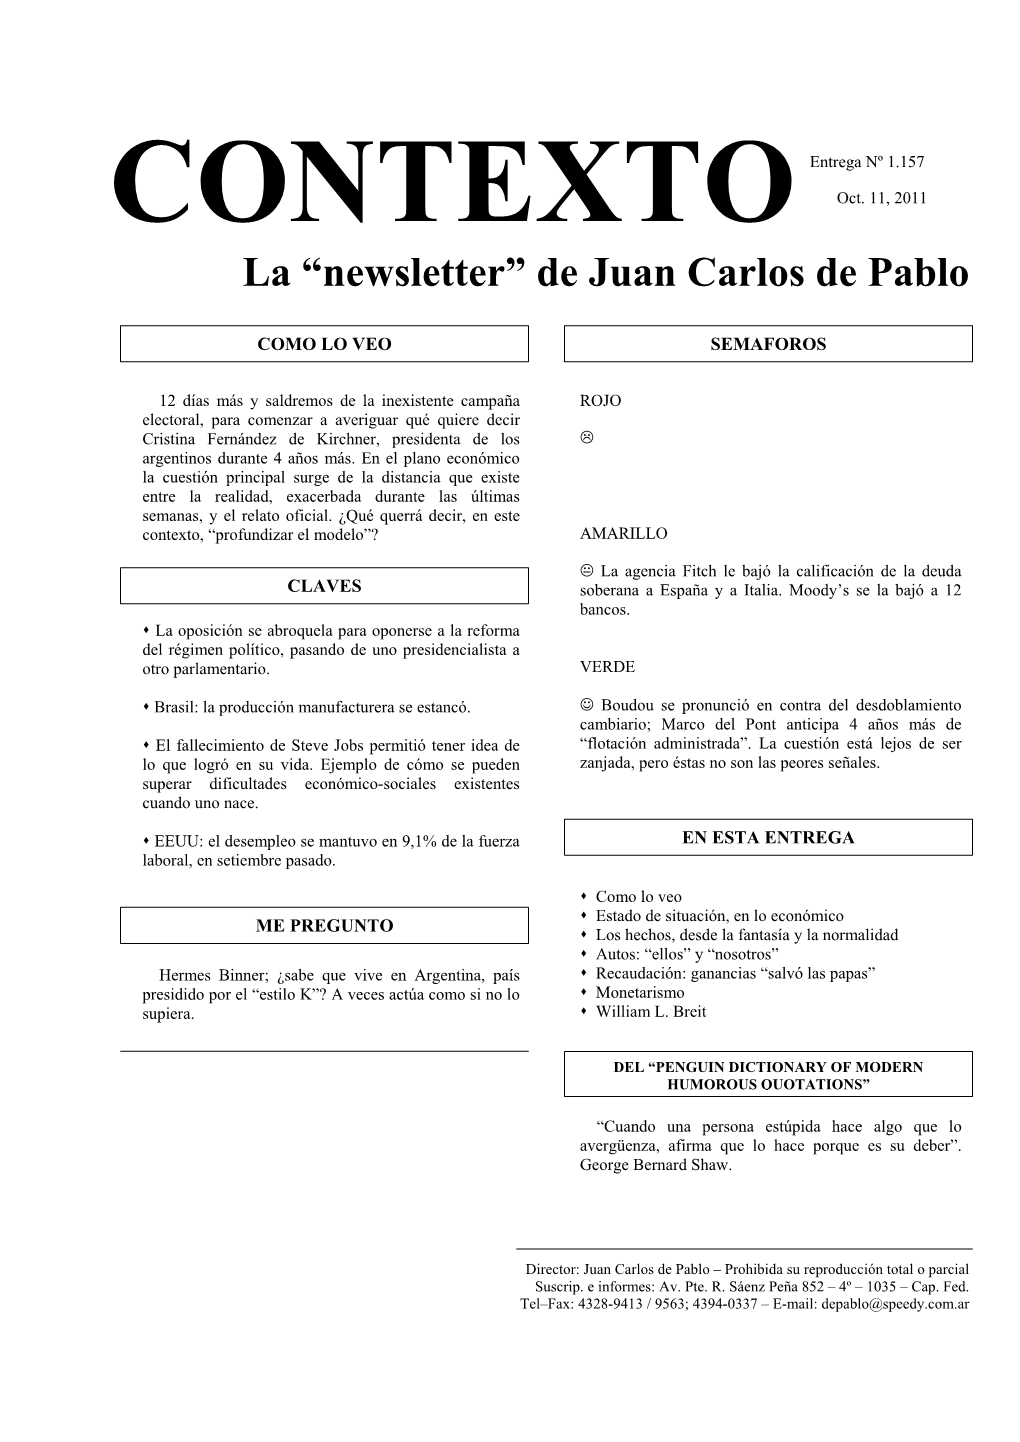 La “Newsletter” De Juan Carlos De Pablo